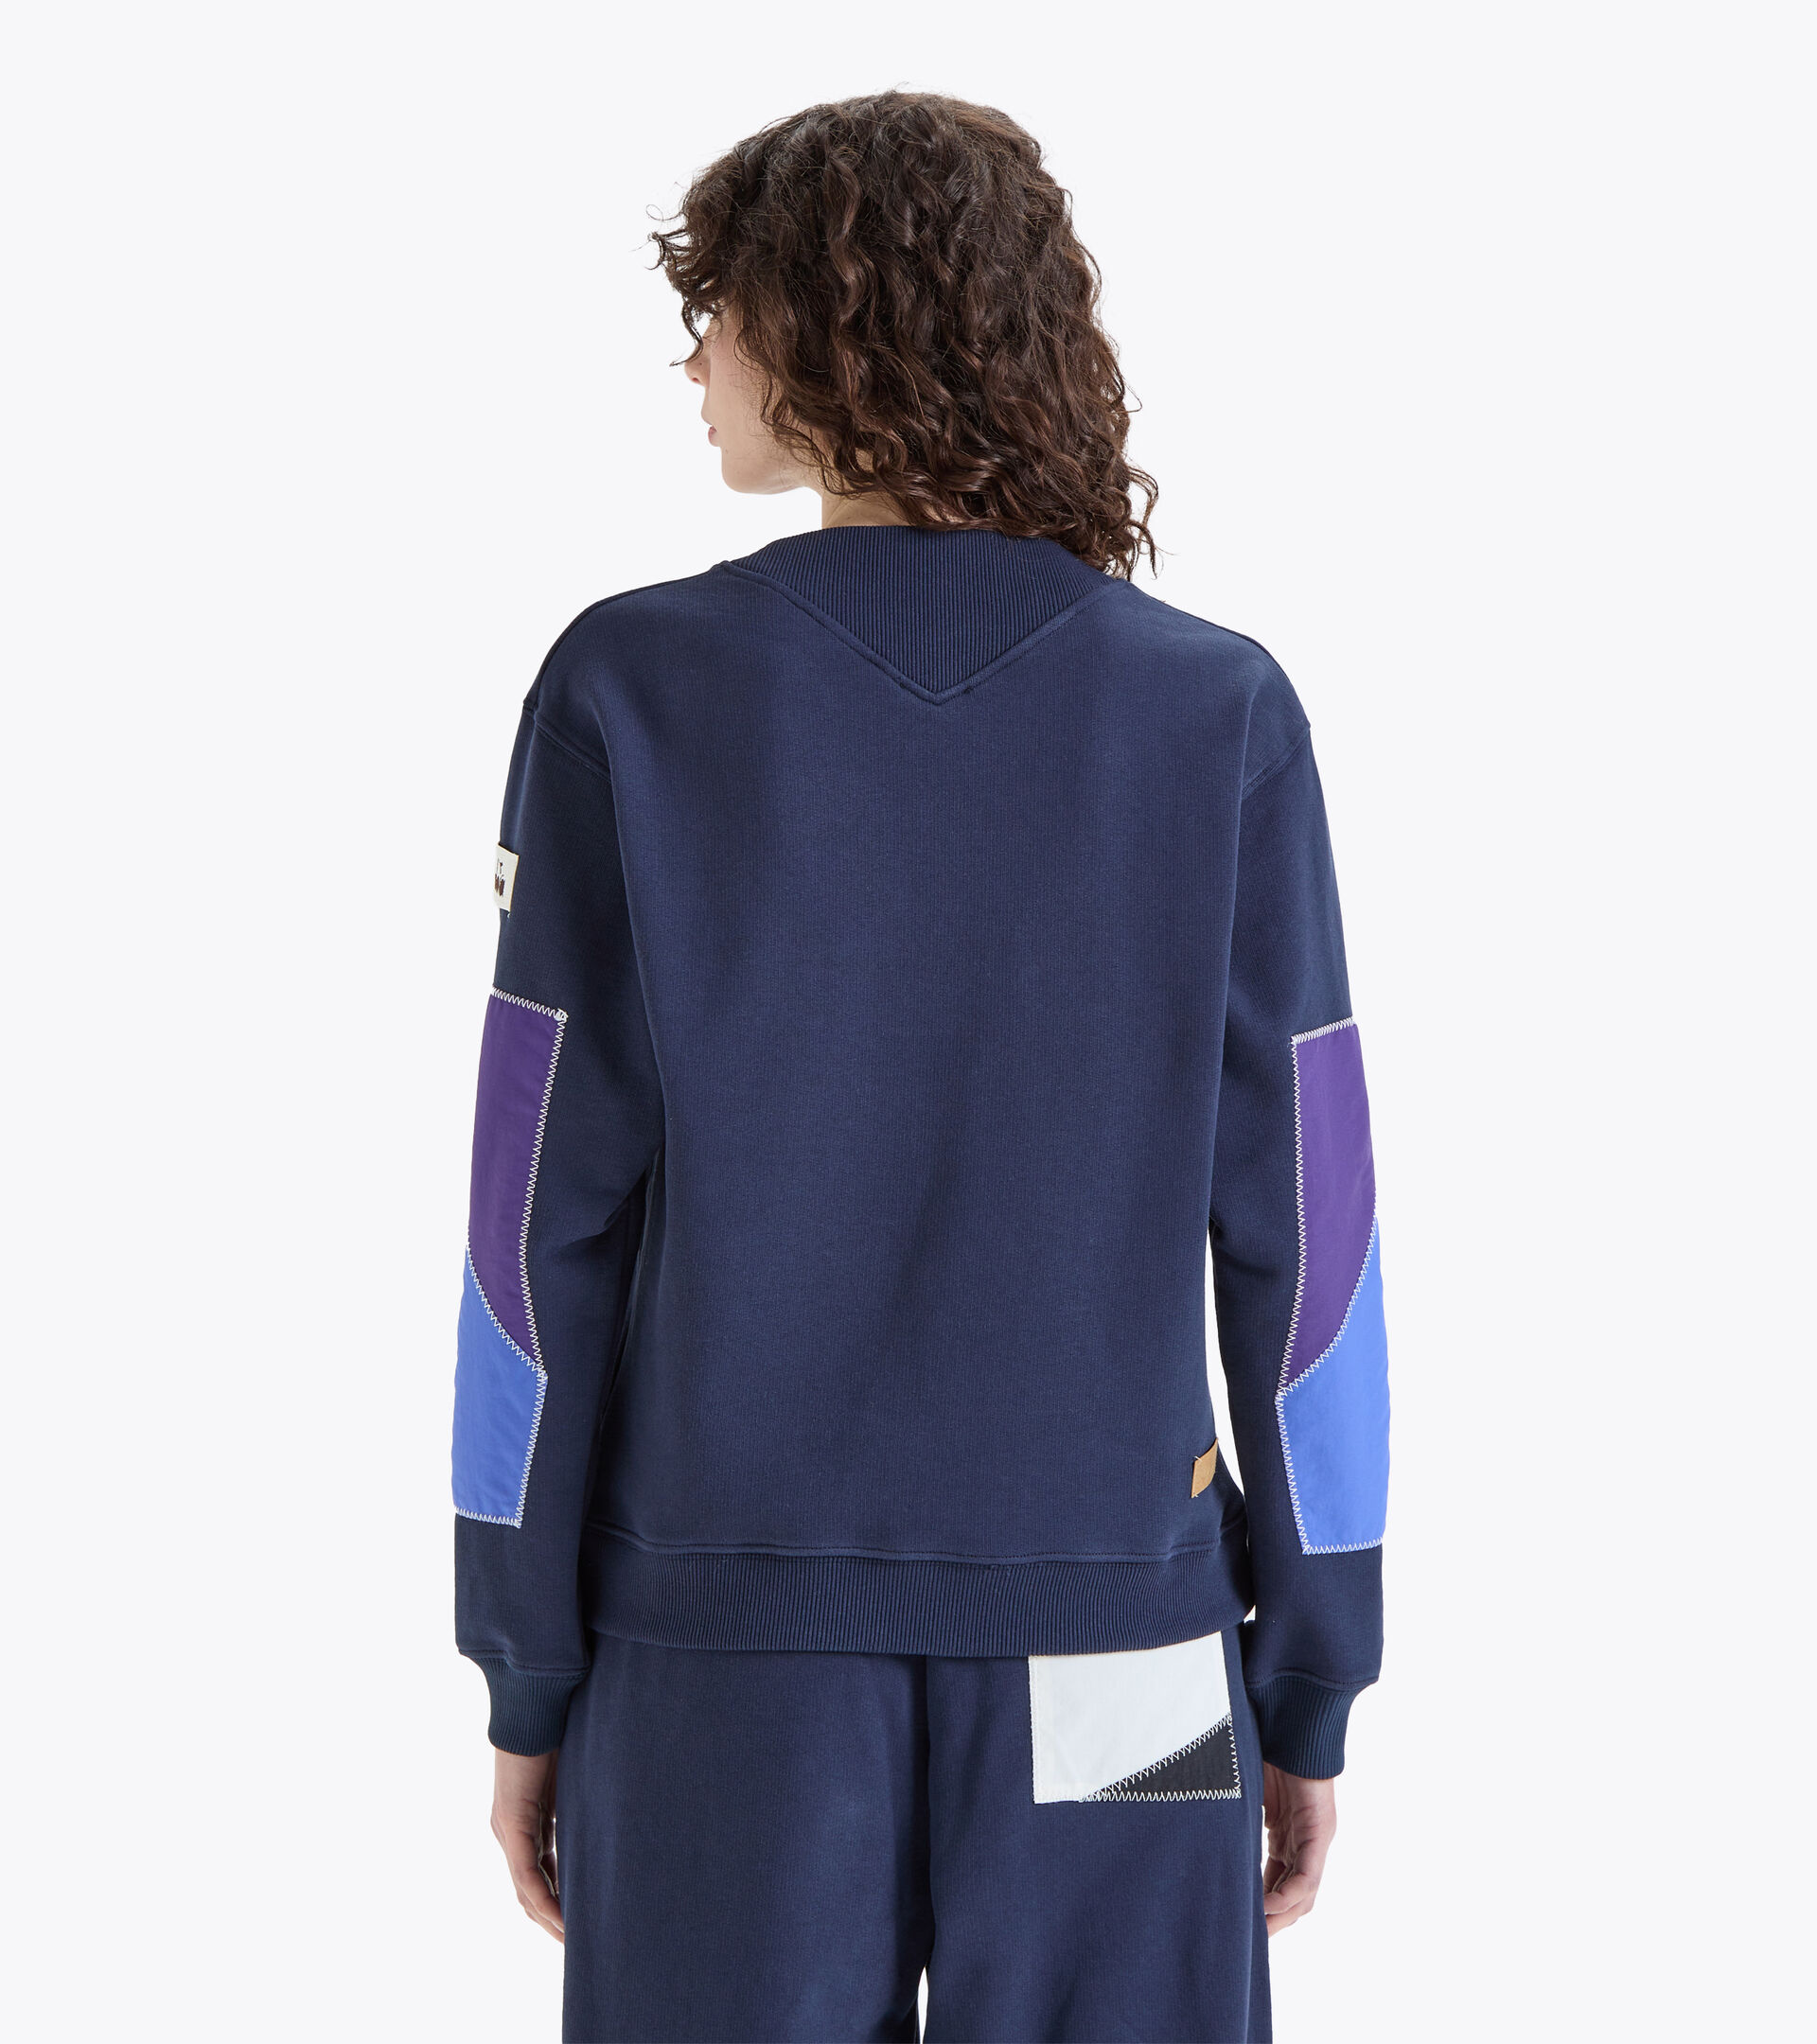 Sweat-shirt Made in Italy 2030 - Femme L. SWEATSHIRT CREW 2030 BLEU CORSAIRE - Diadora